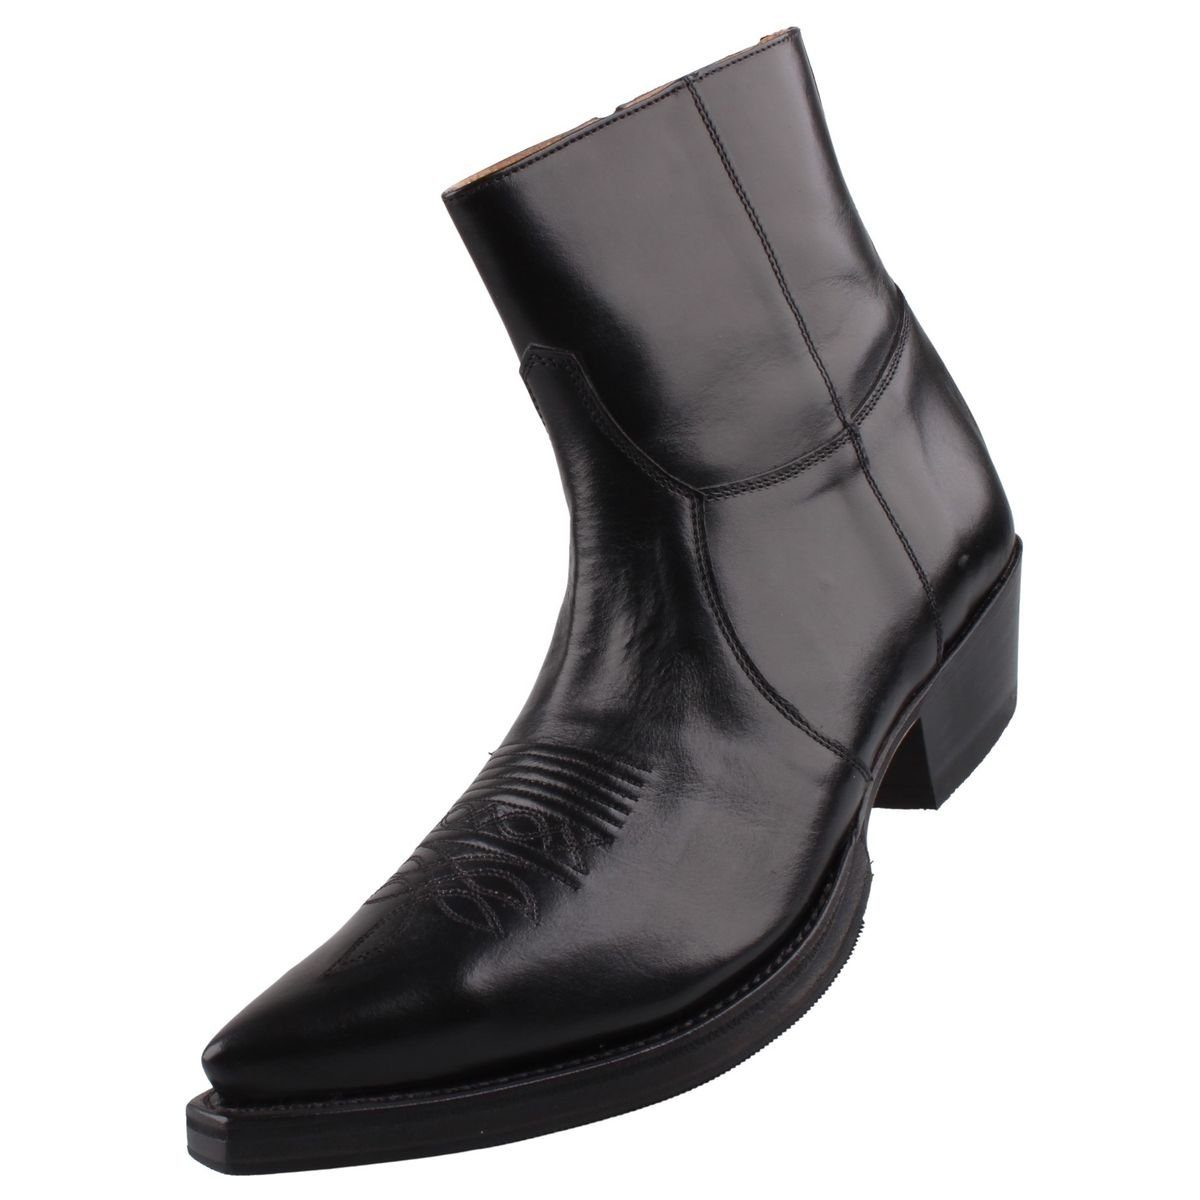 Sendra Boots 7826-Crust Negro Ter.Vr Negro Stiefelette